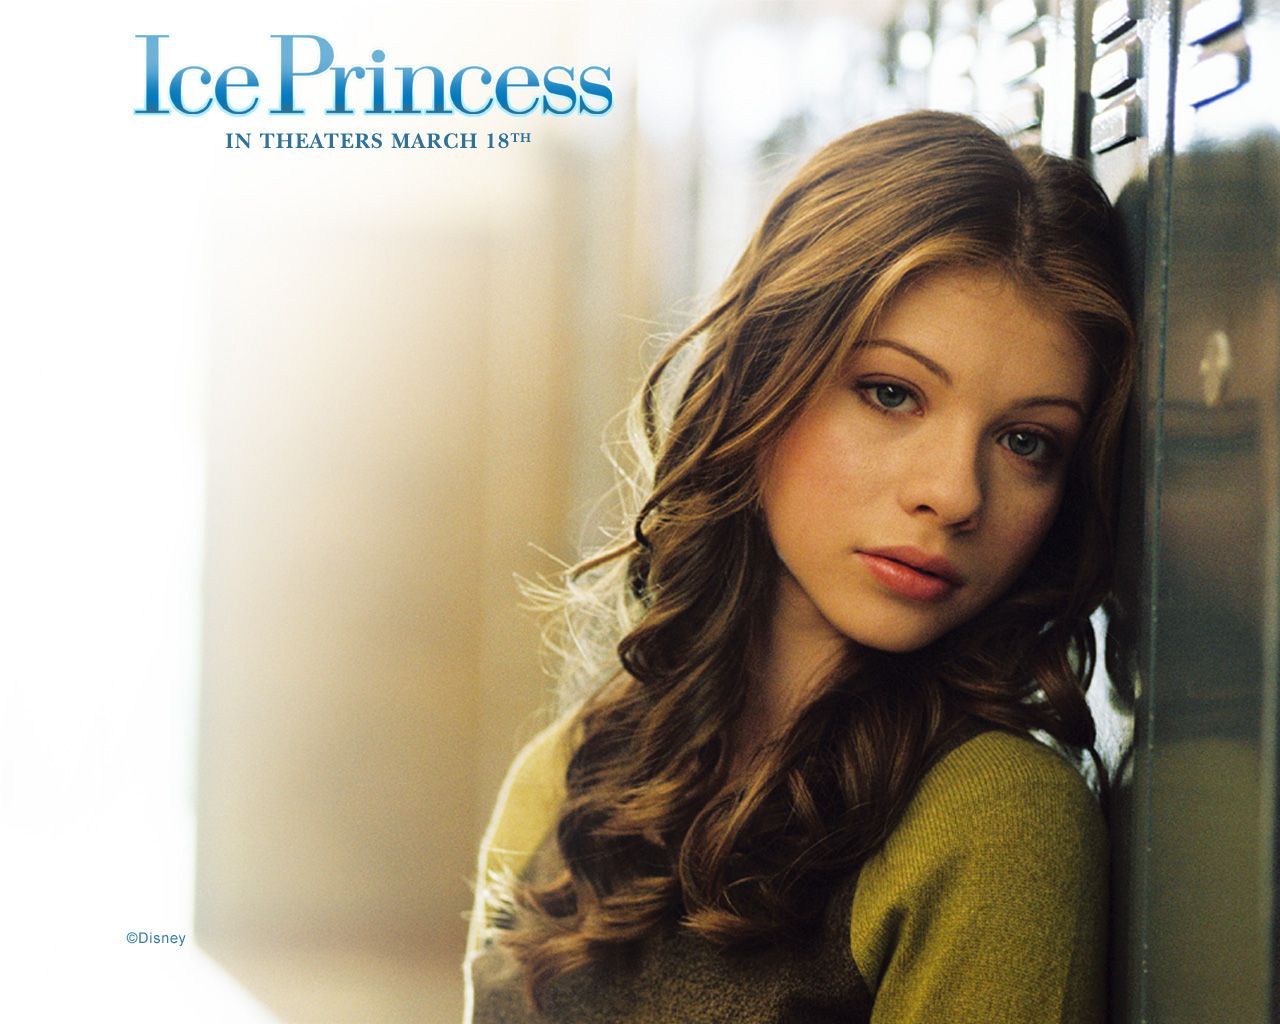 Best Ice Princess Movie ideas. ice princess movie, ice princess, michelle trachtenberg